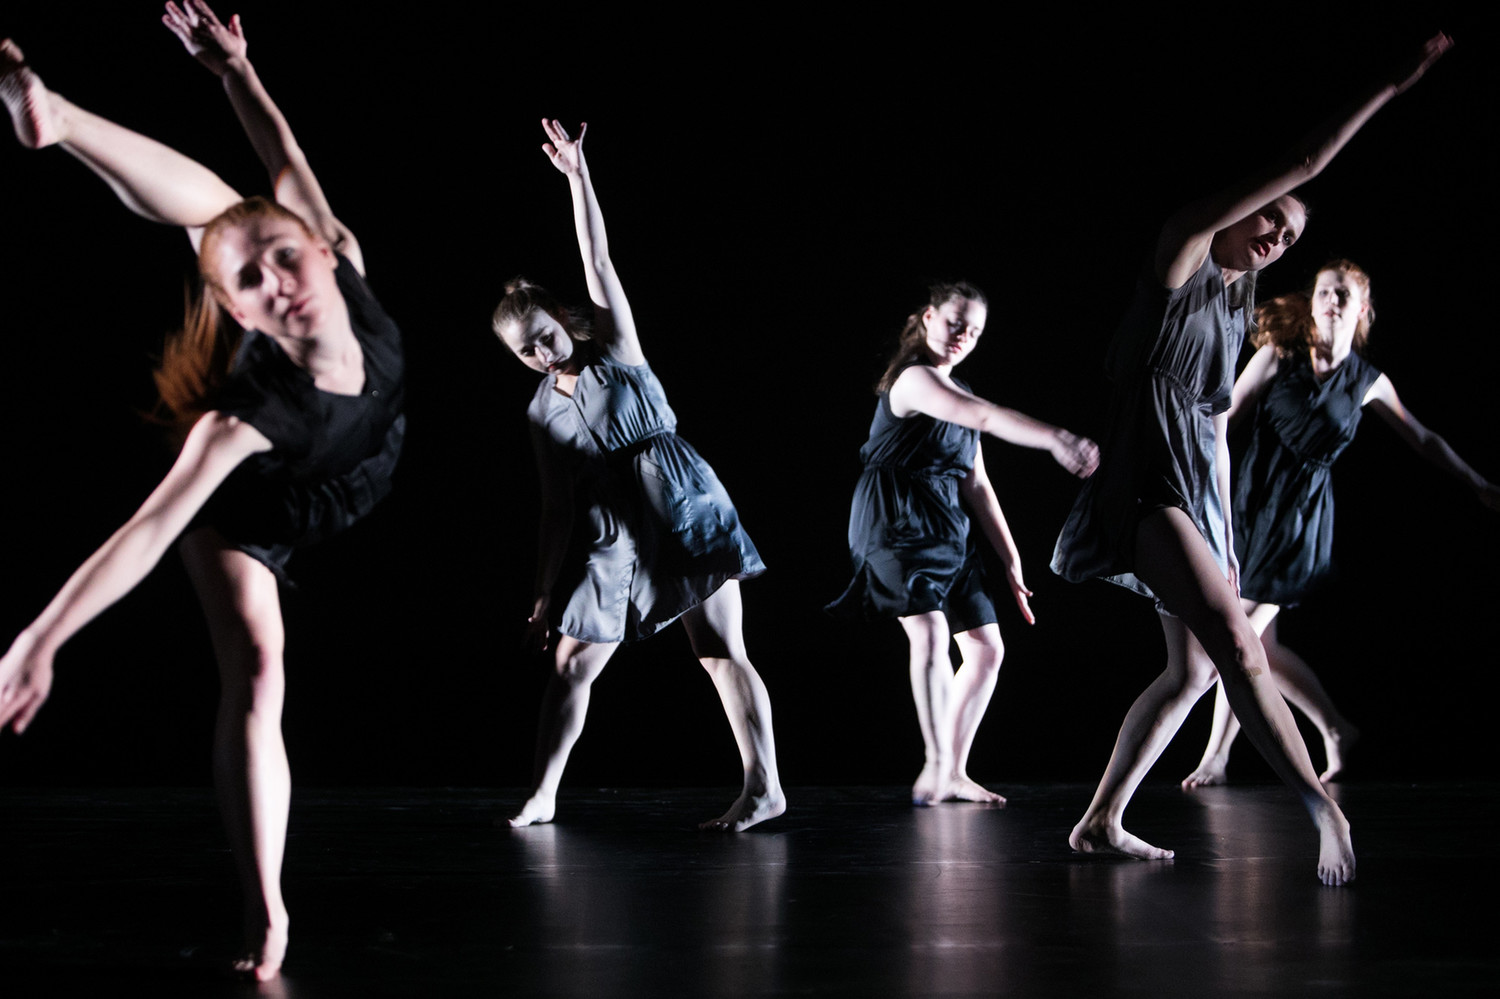 Five dancers in various movements dark costumes and lighting 